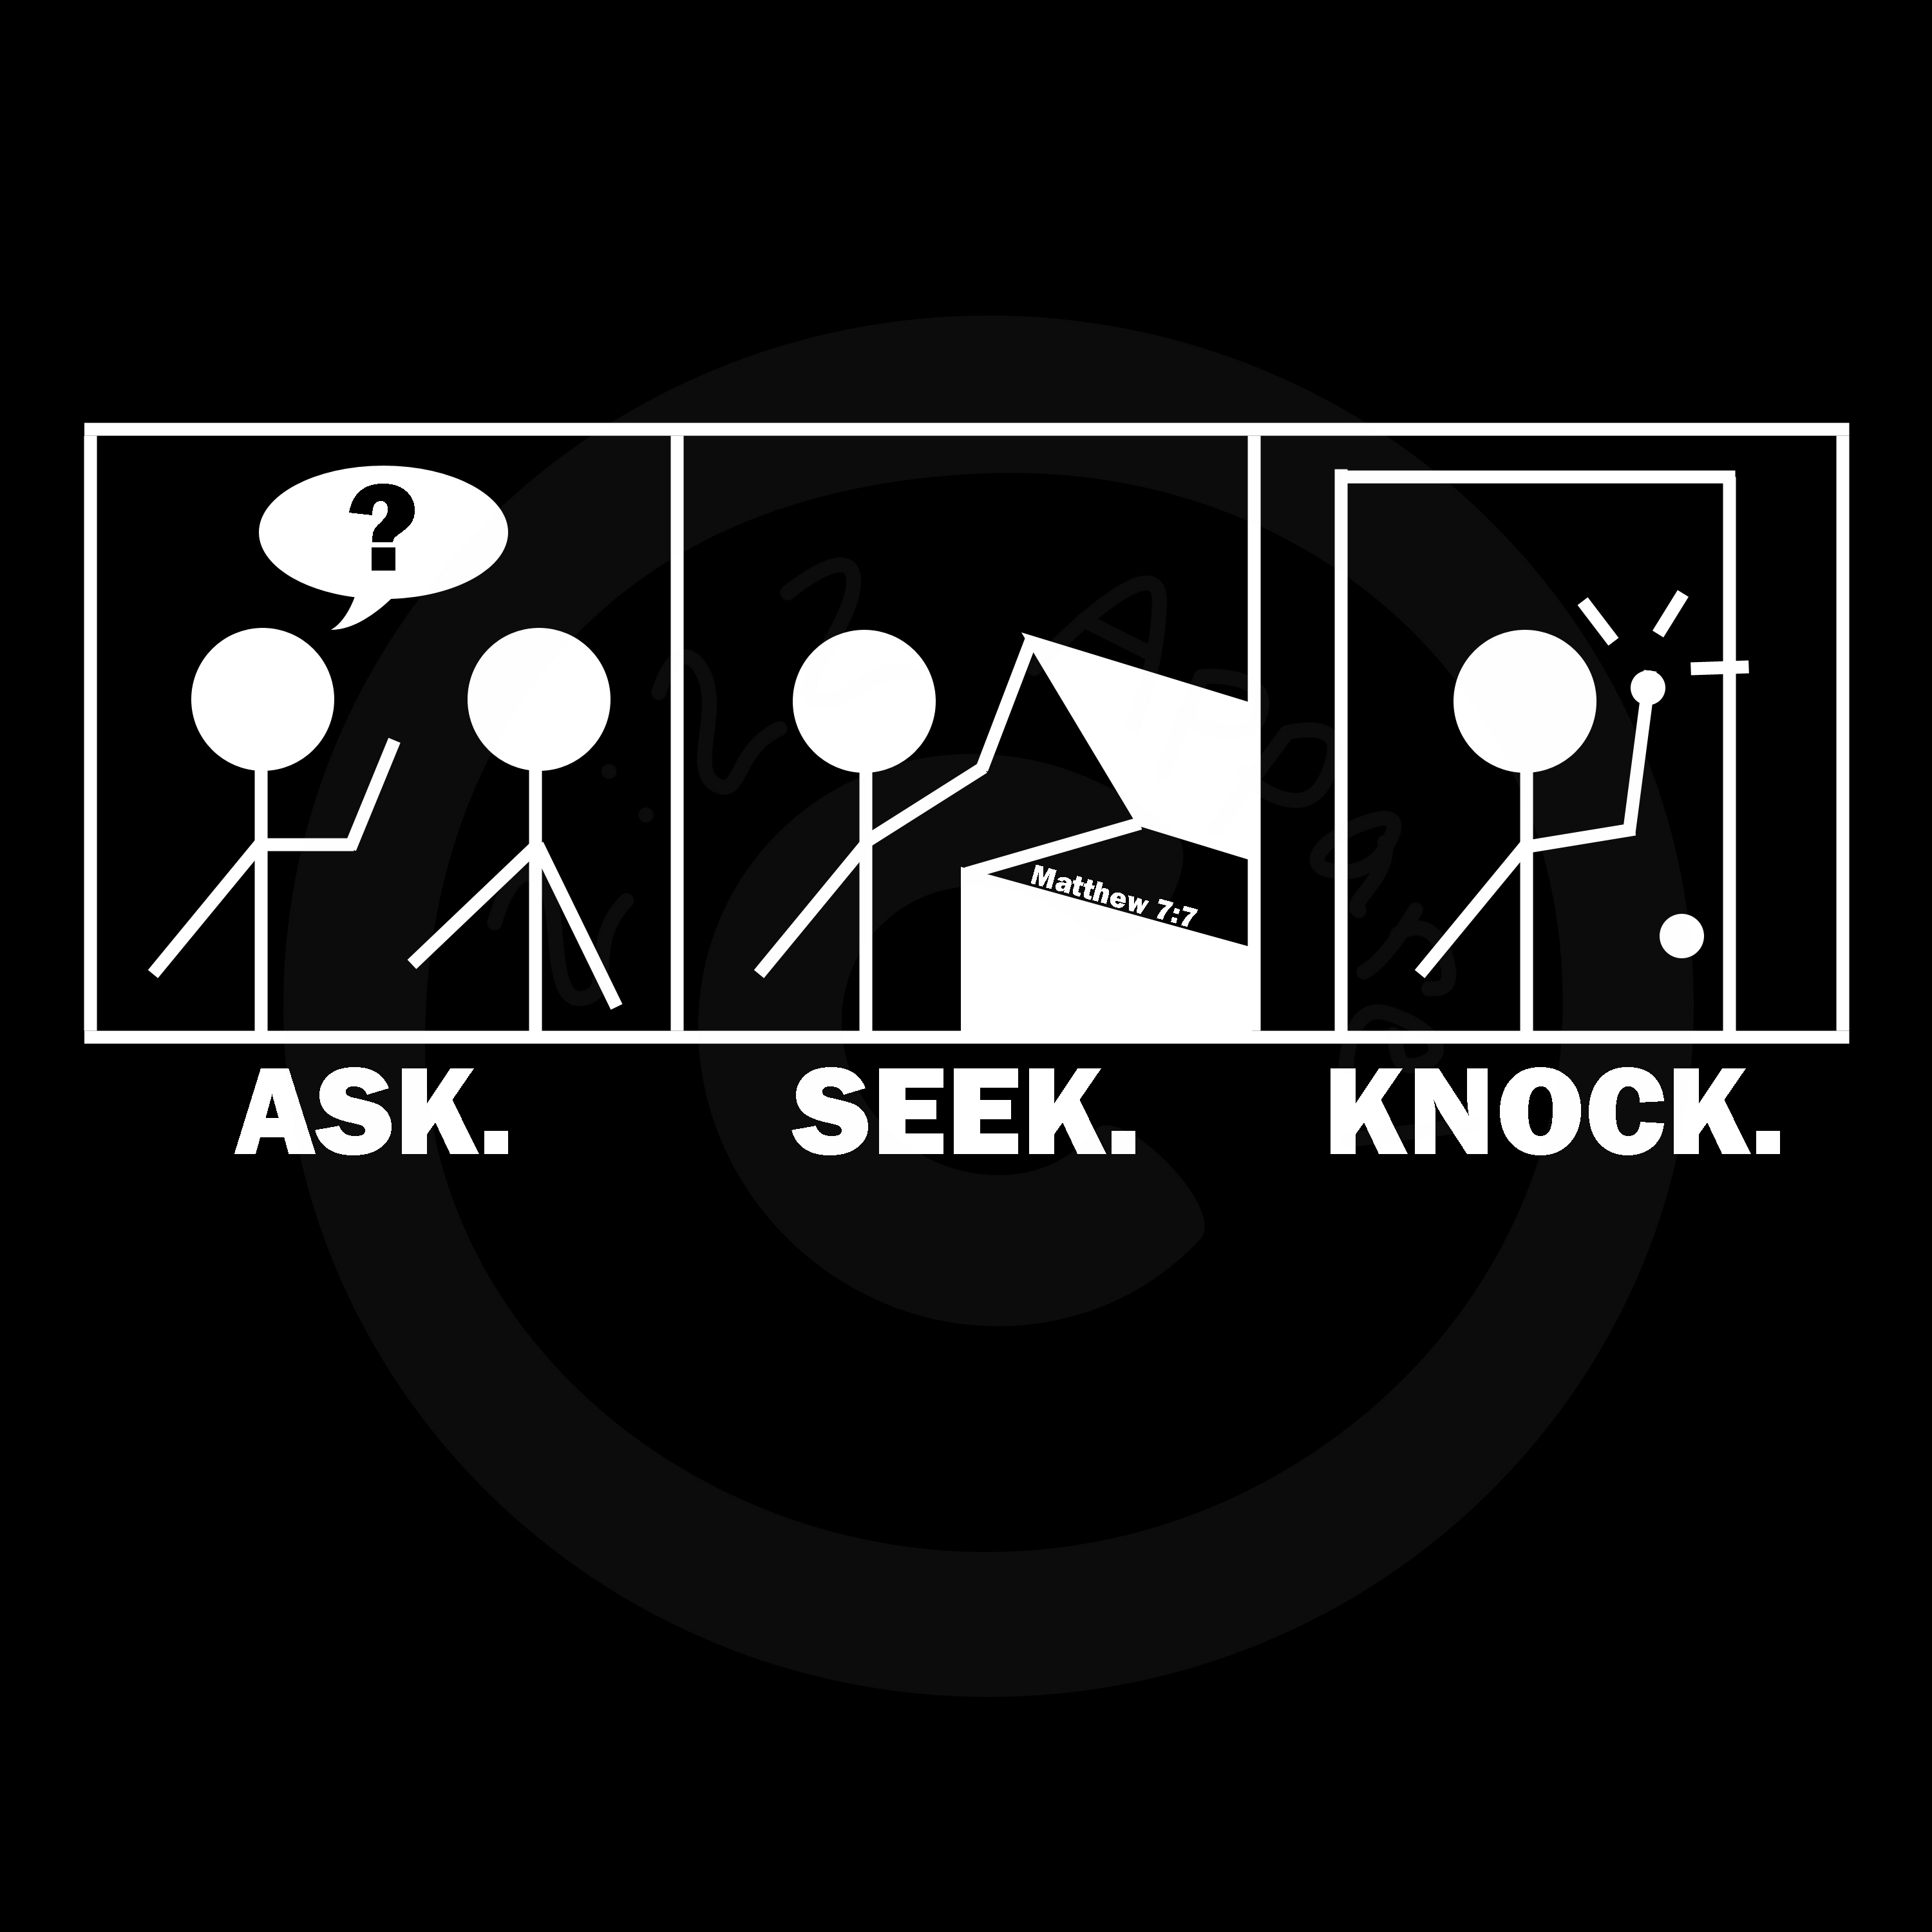 Ask. Seek. Knock. | 2:22 Apparel